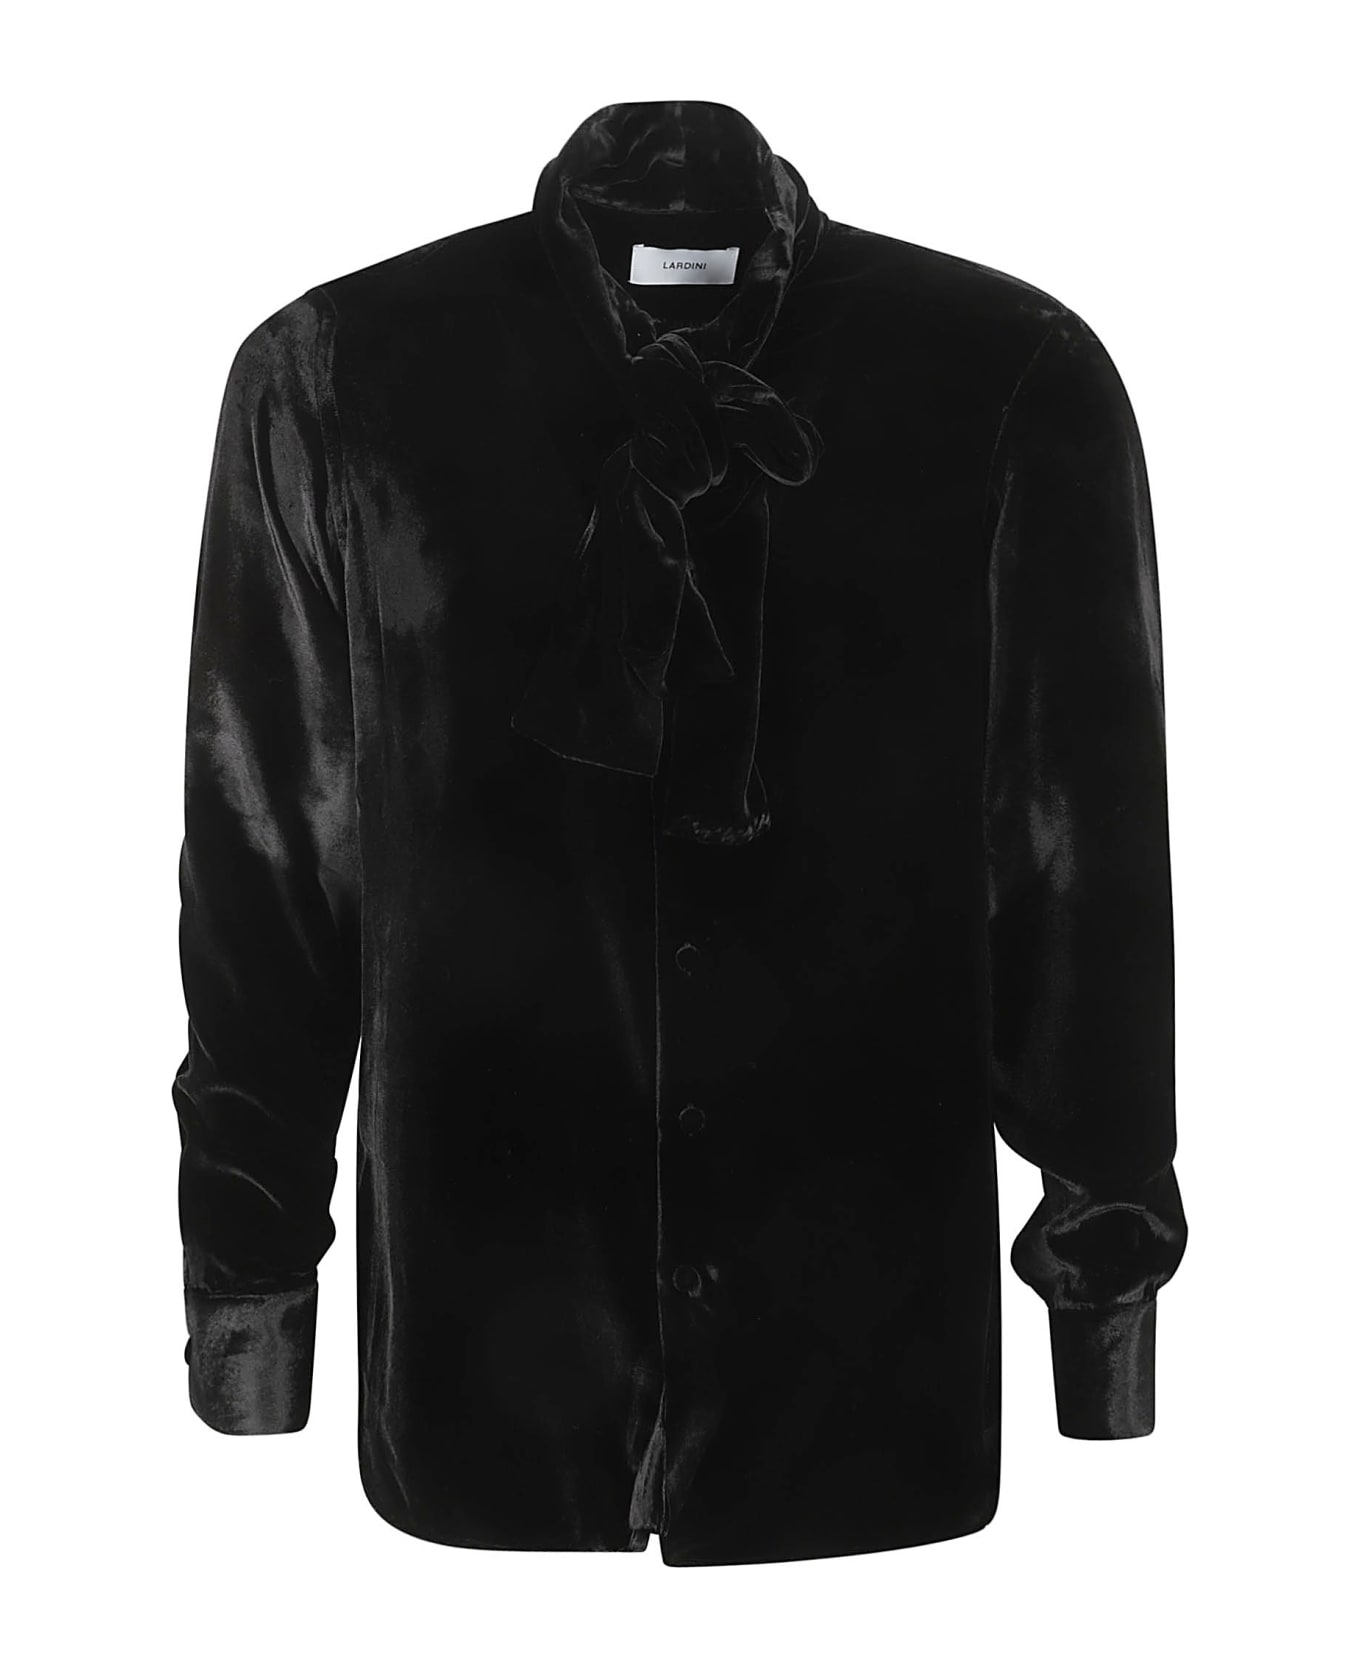 Lardini Scarfed Shirt - Black